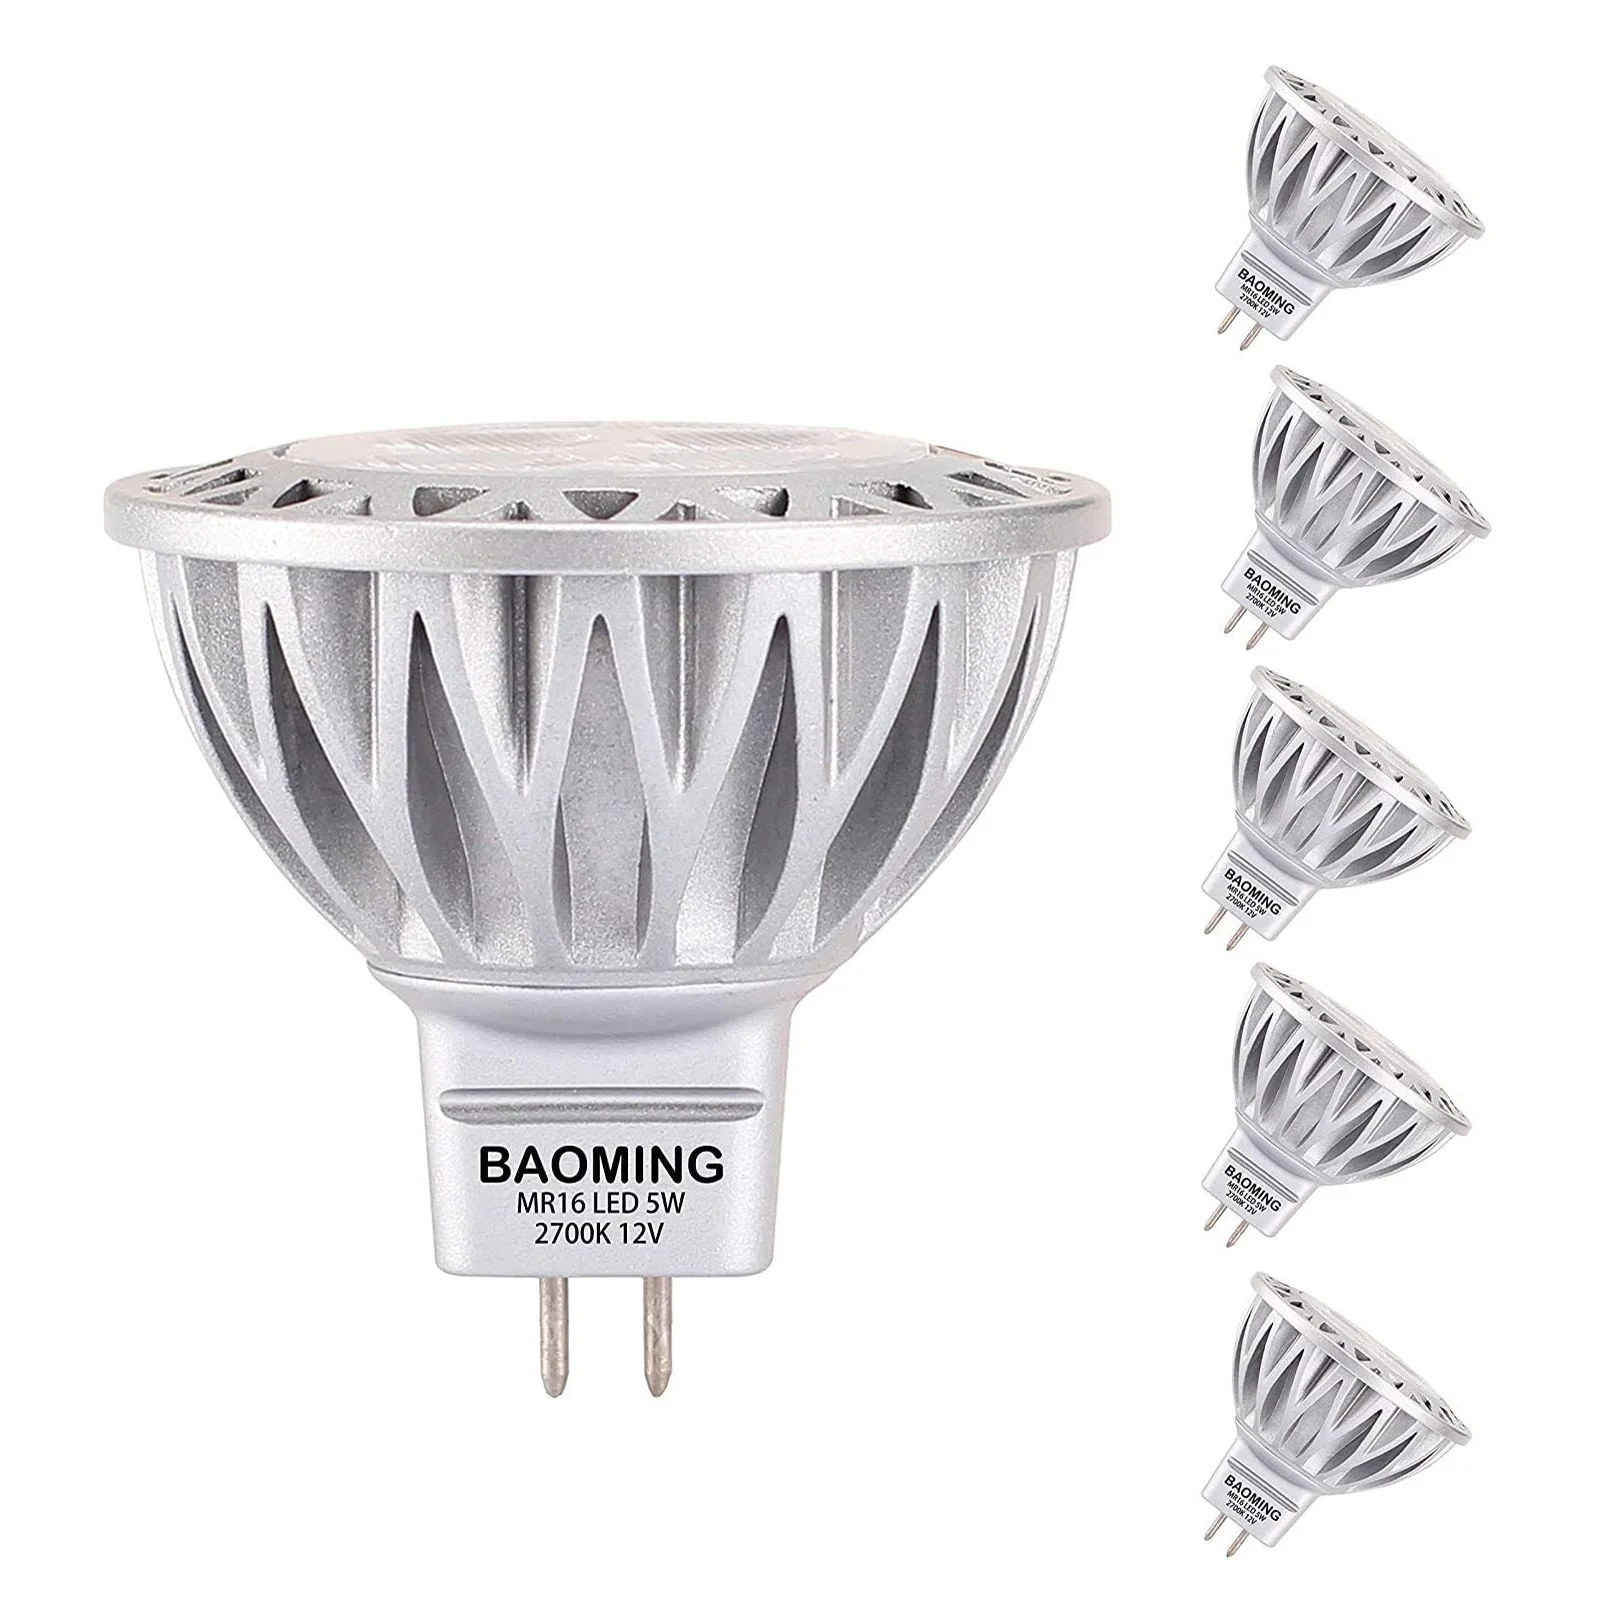 5W 7W 12V Mini Spotlight Dimmable MR16 LED Bulb light GU5.3 Lamp MR 16 led spotlight